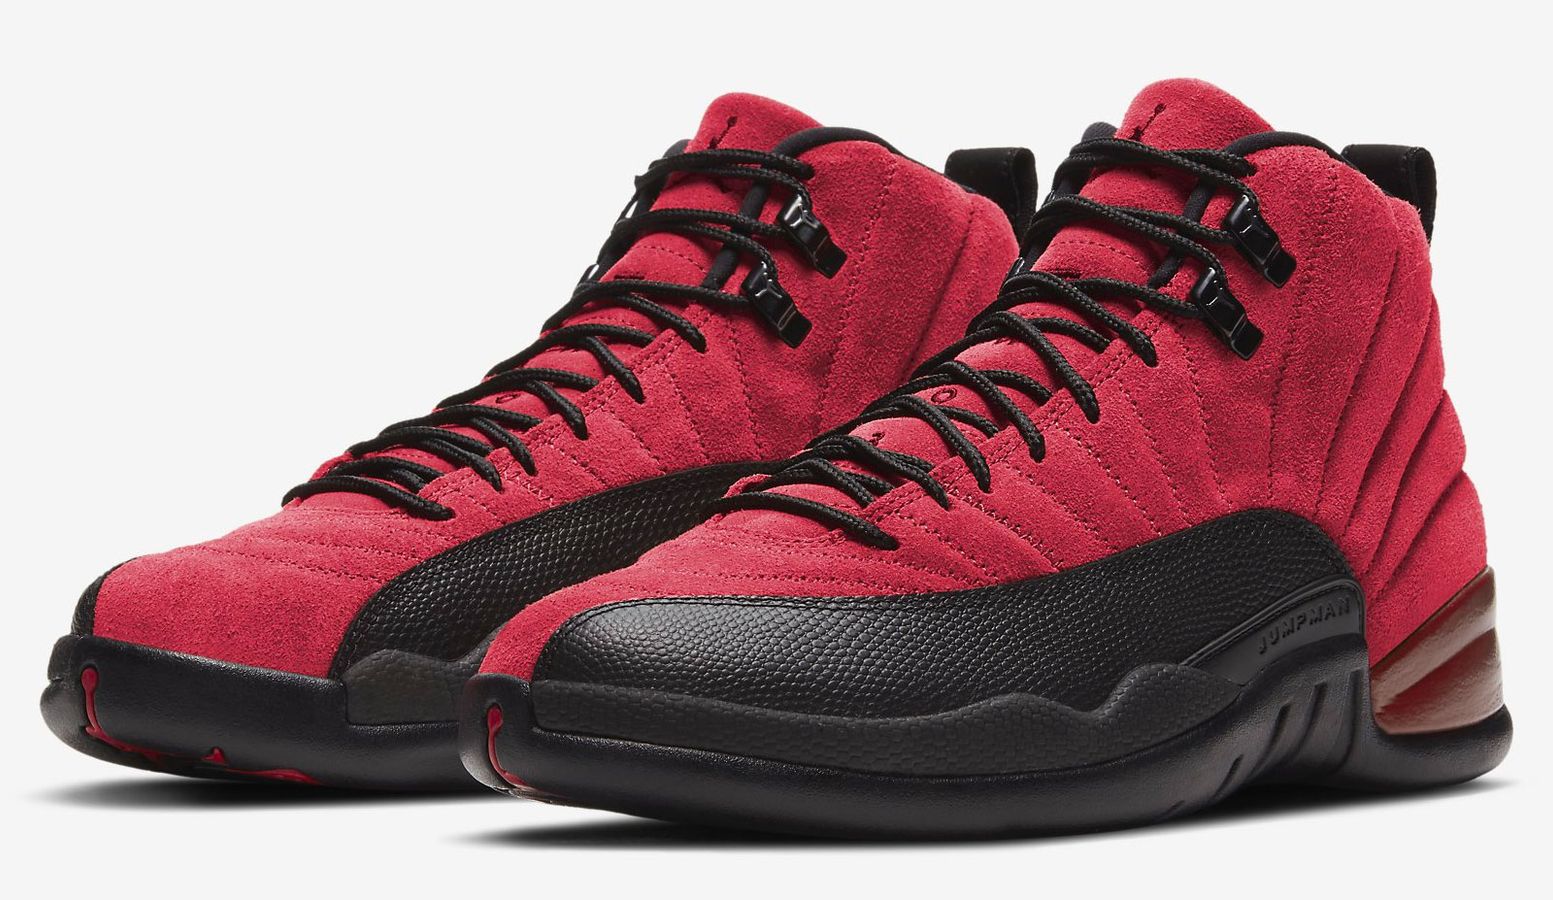 Best Air Jordan 12 colorways "Reverse Flu Game" product image of a pair of red sneakers with black overlays.